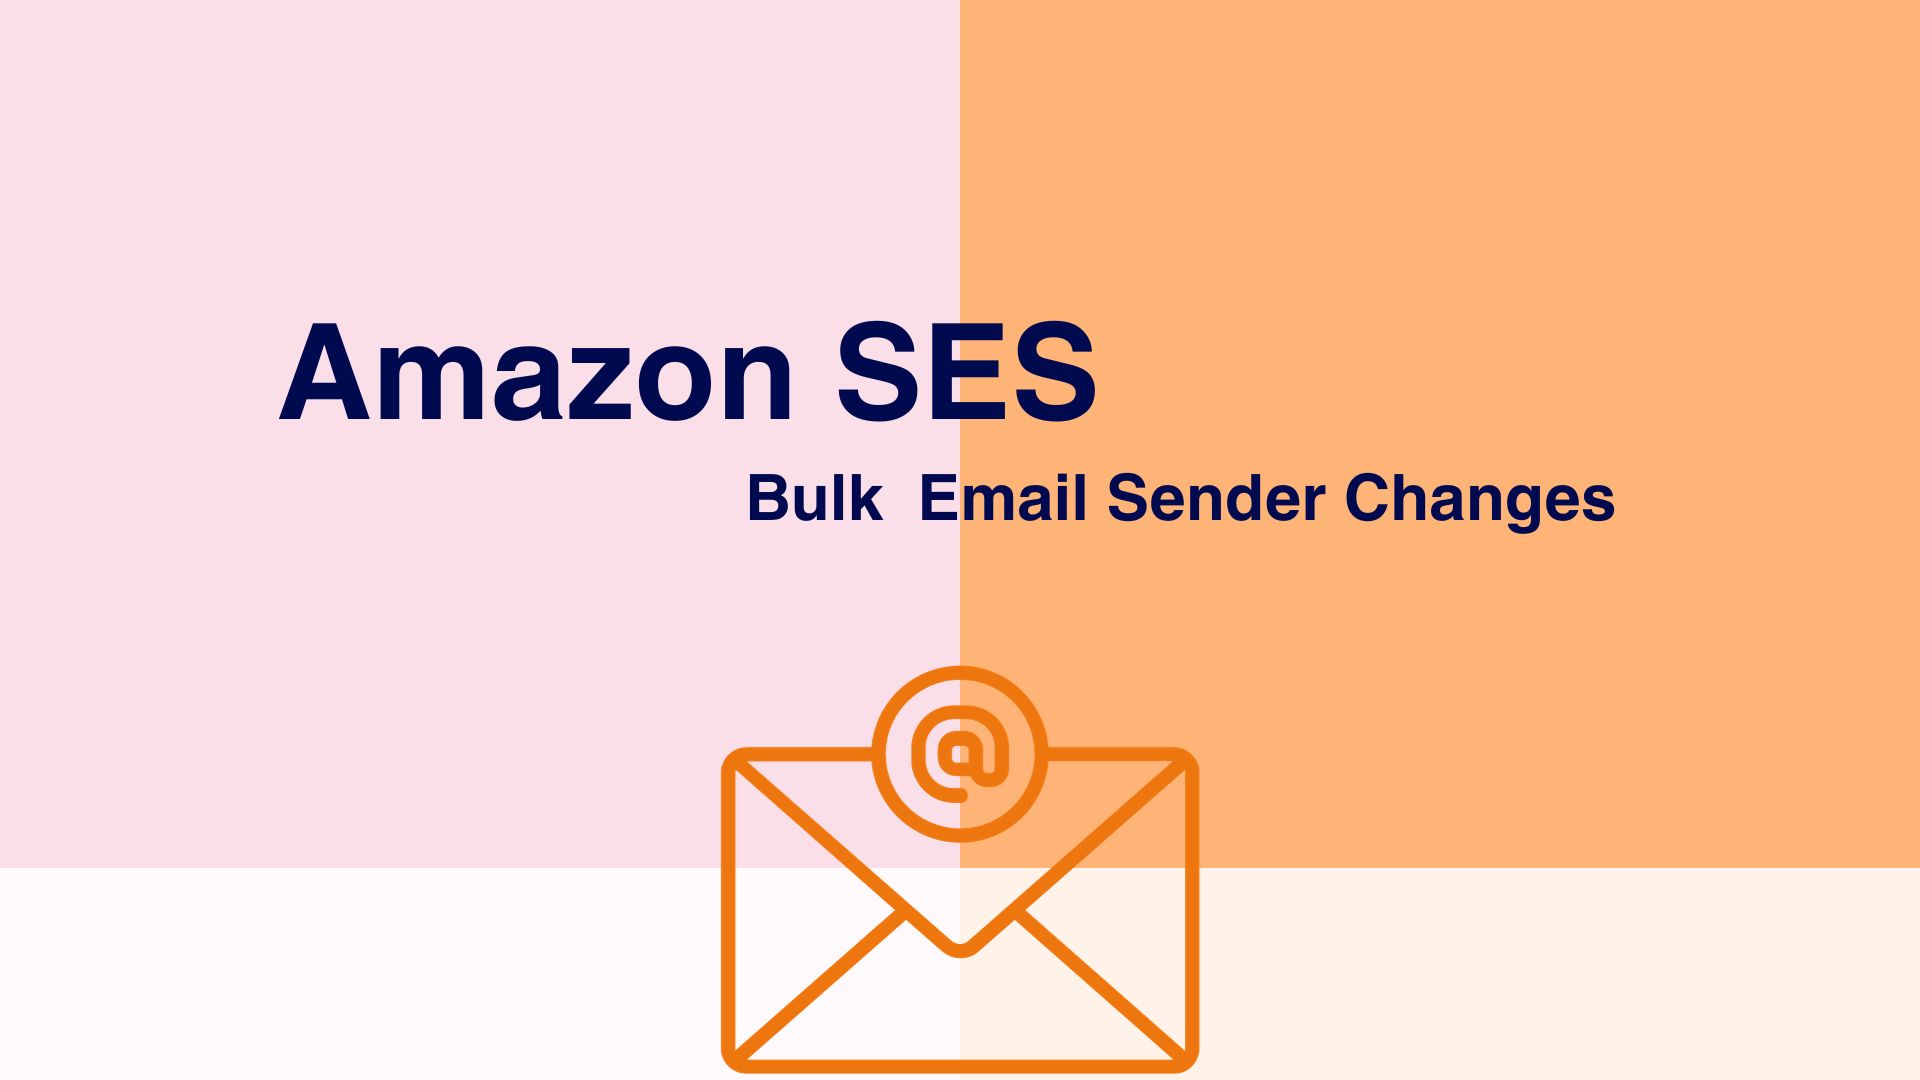 Amazon SES explains Yahoo/Gmail bulk sender changes